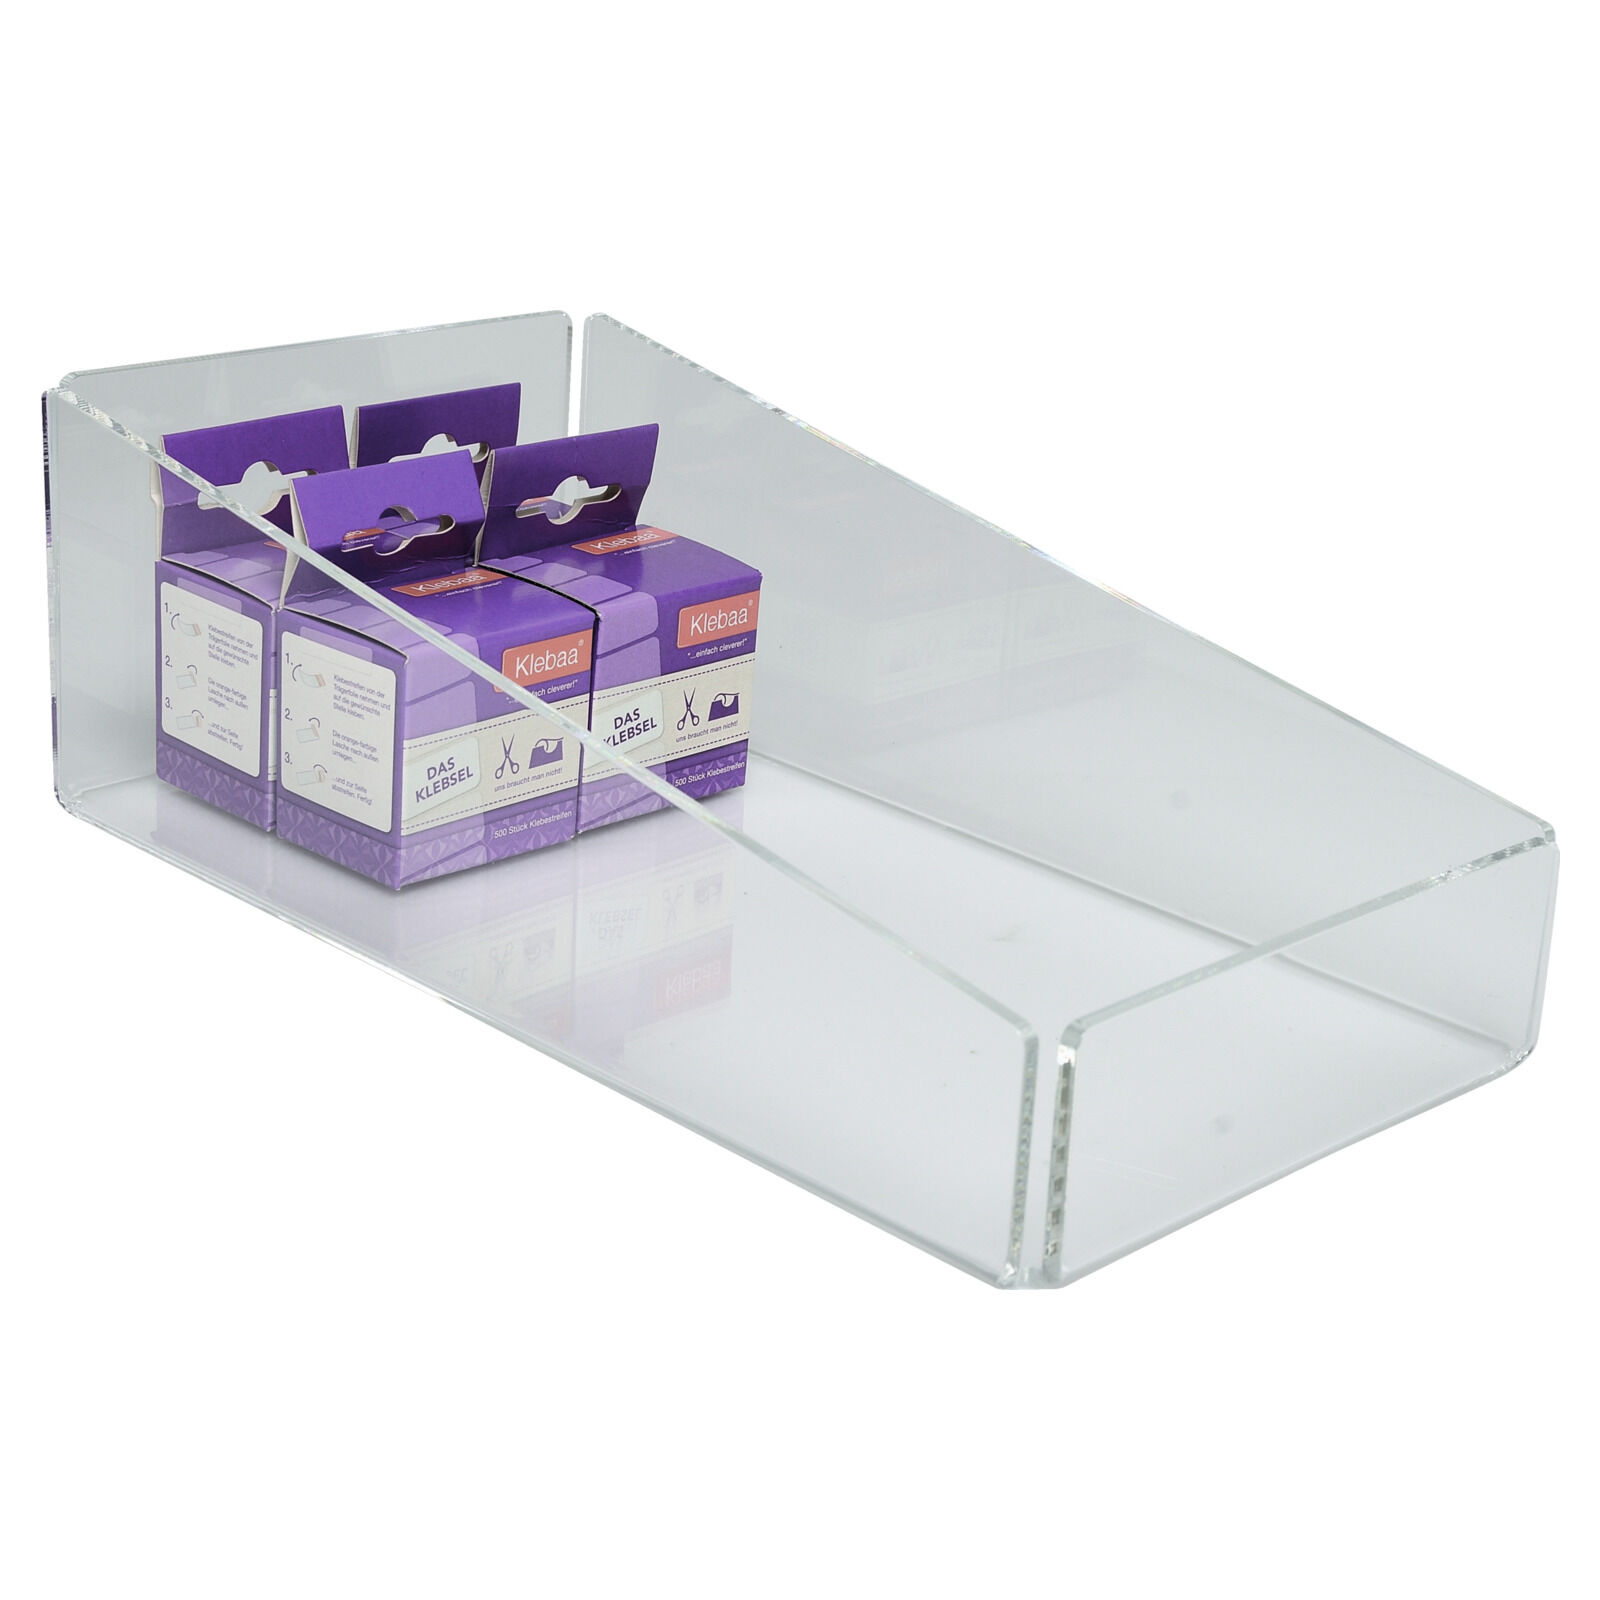 Produktbox aus Acryglas H 10,0 cm, B 16,0 cm, T 30,0 cm Bild 2